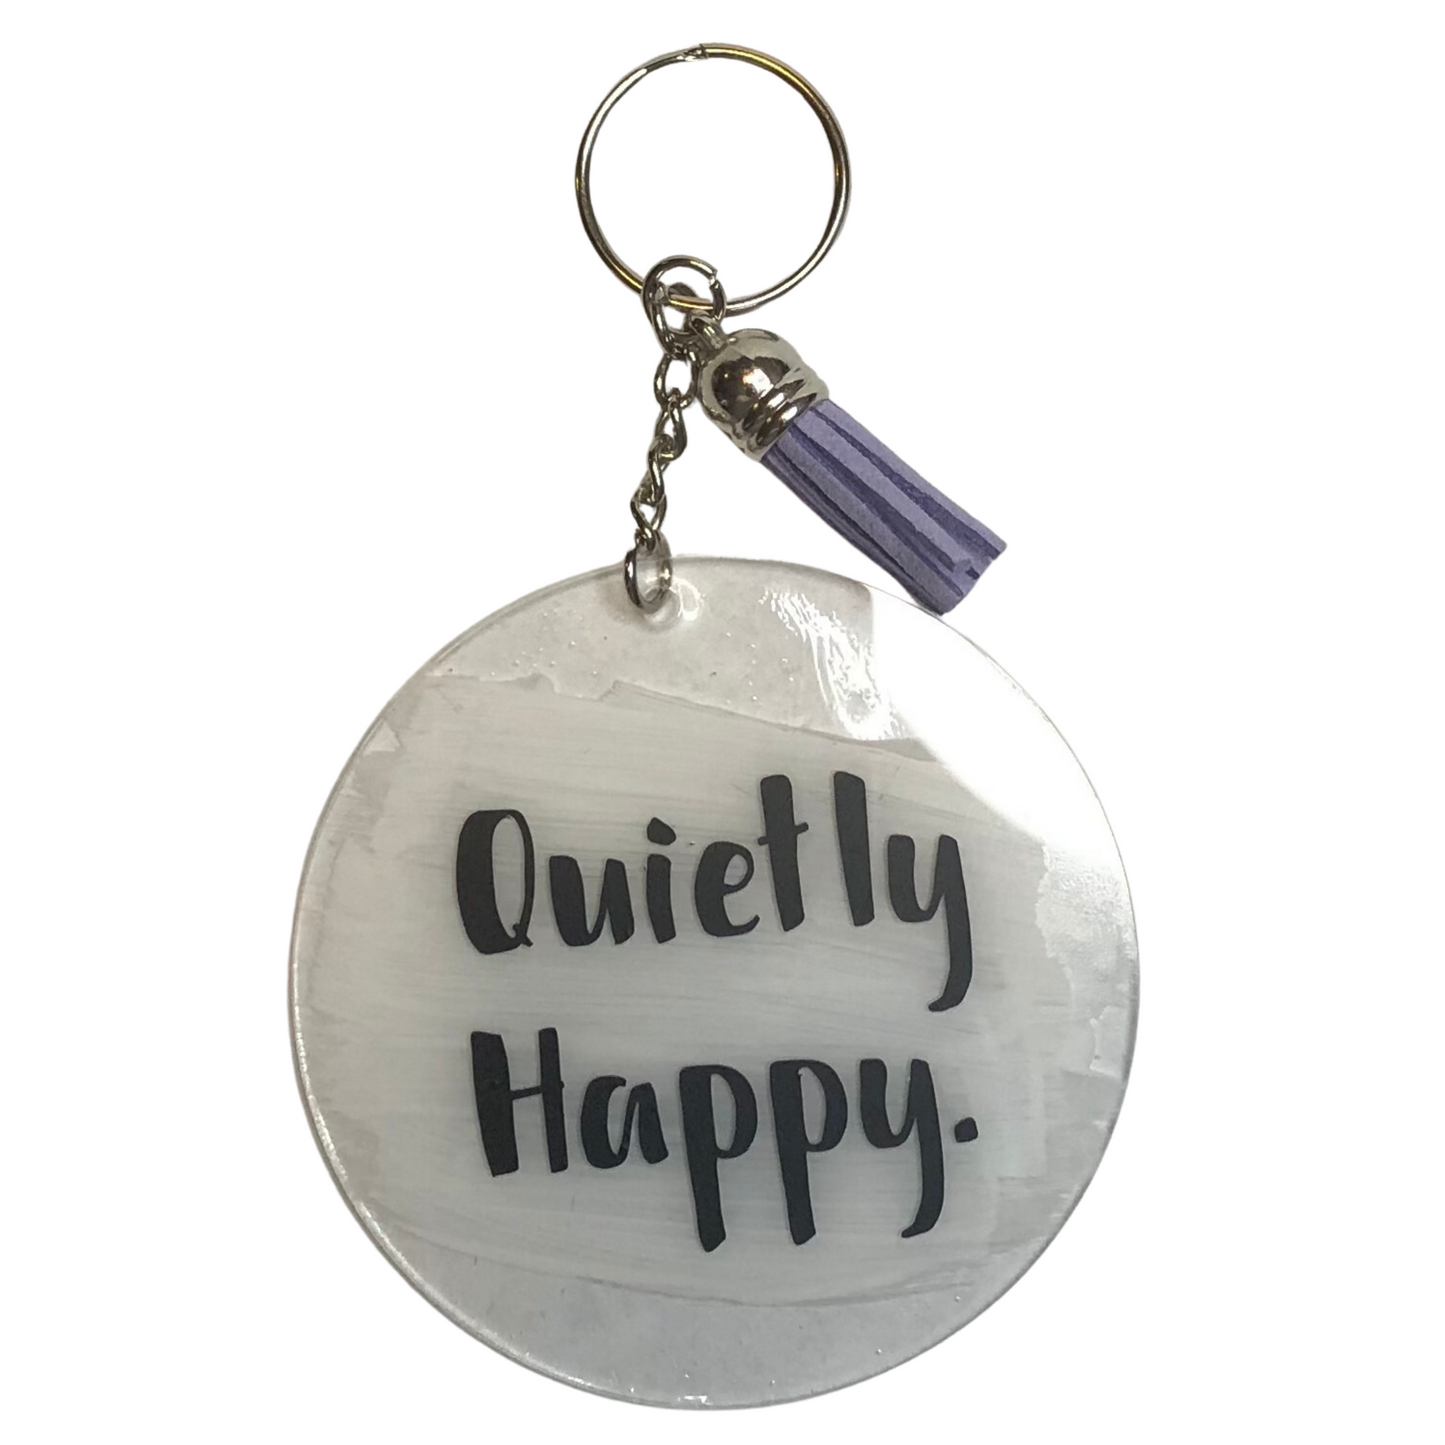 Quietly Happy. Keychain